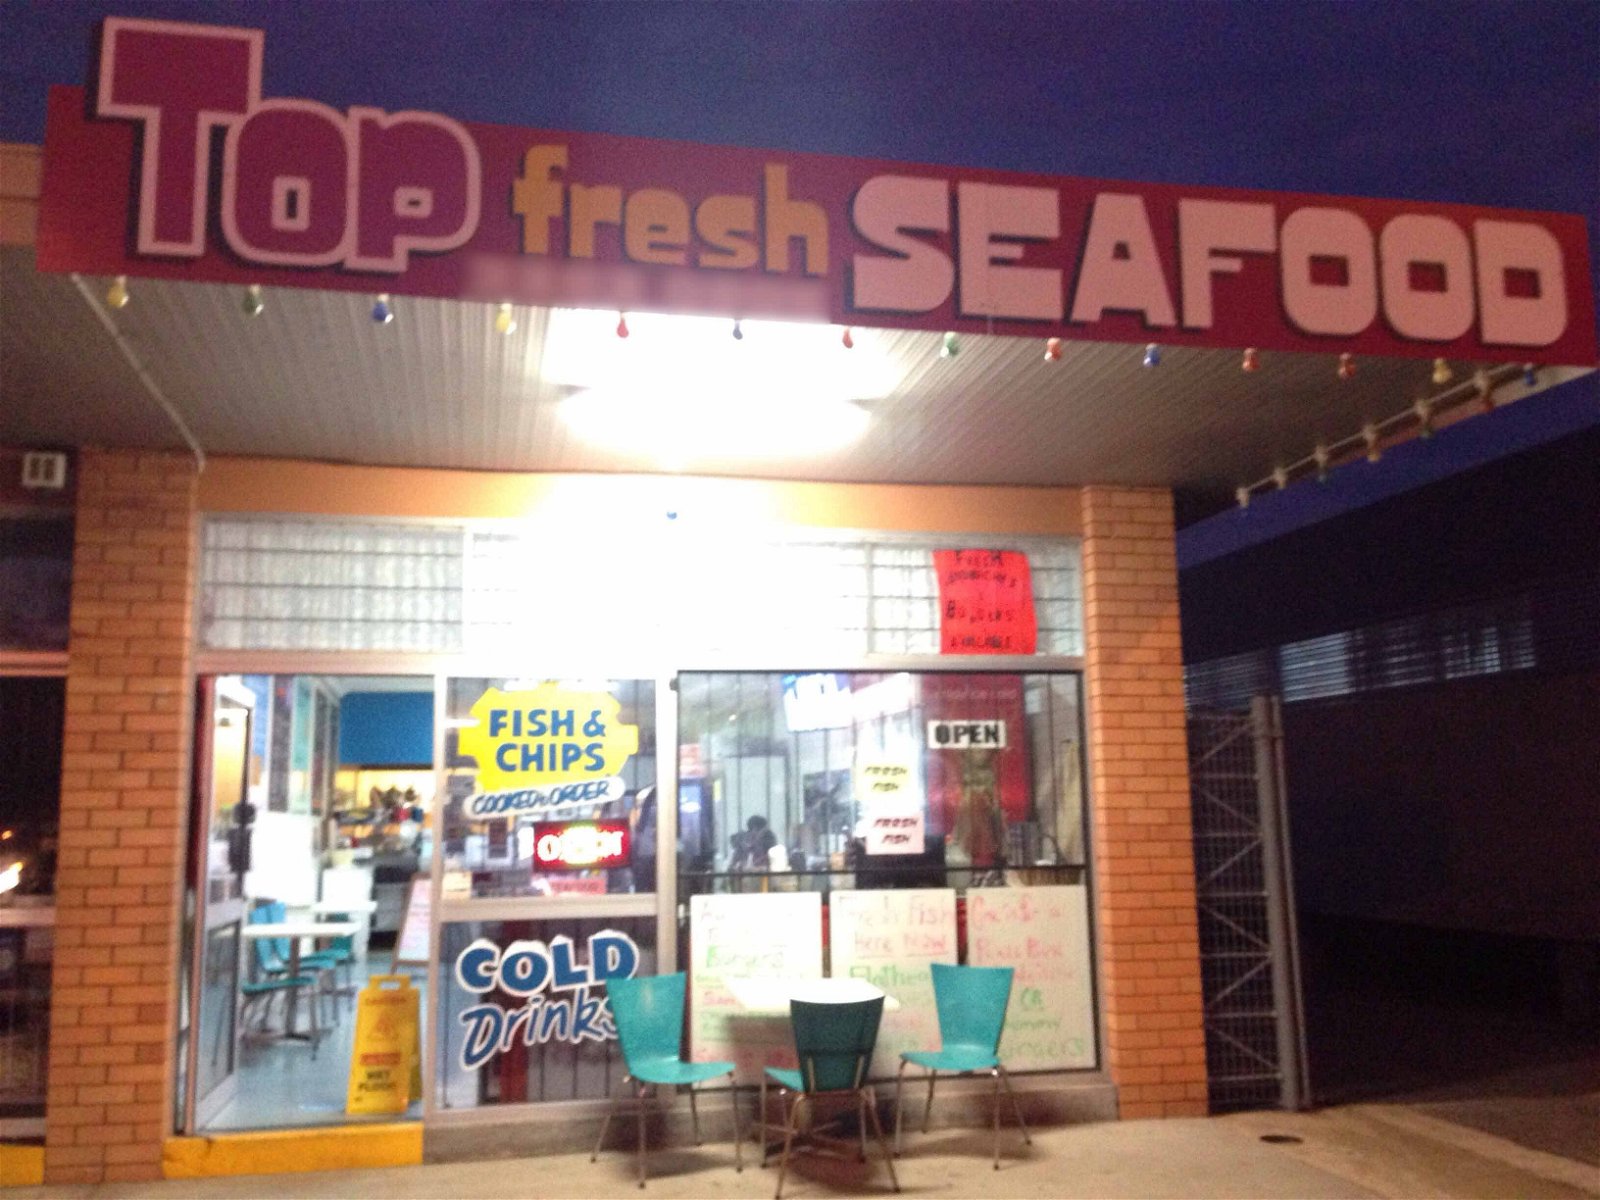 Top Fresh Seafood - Tourism Gold Coast